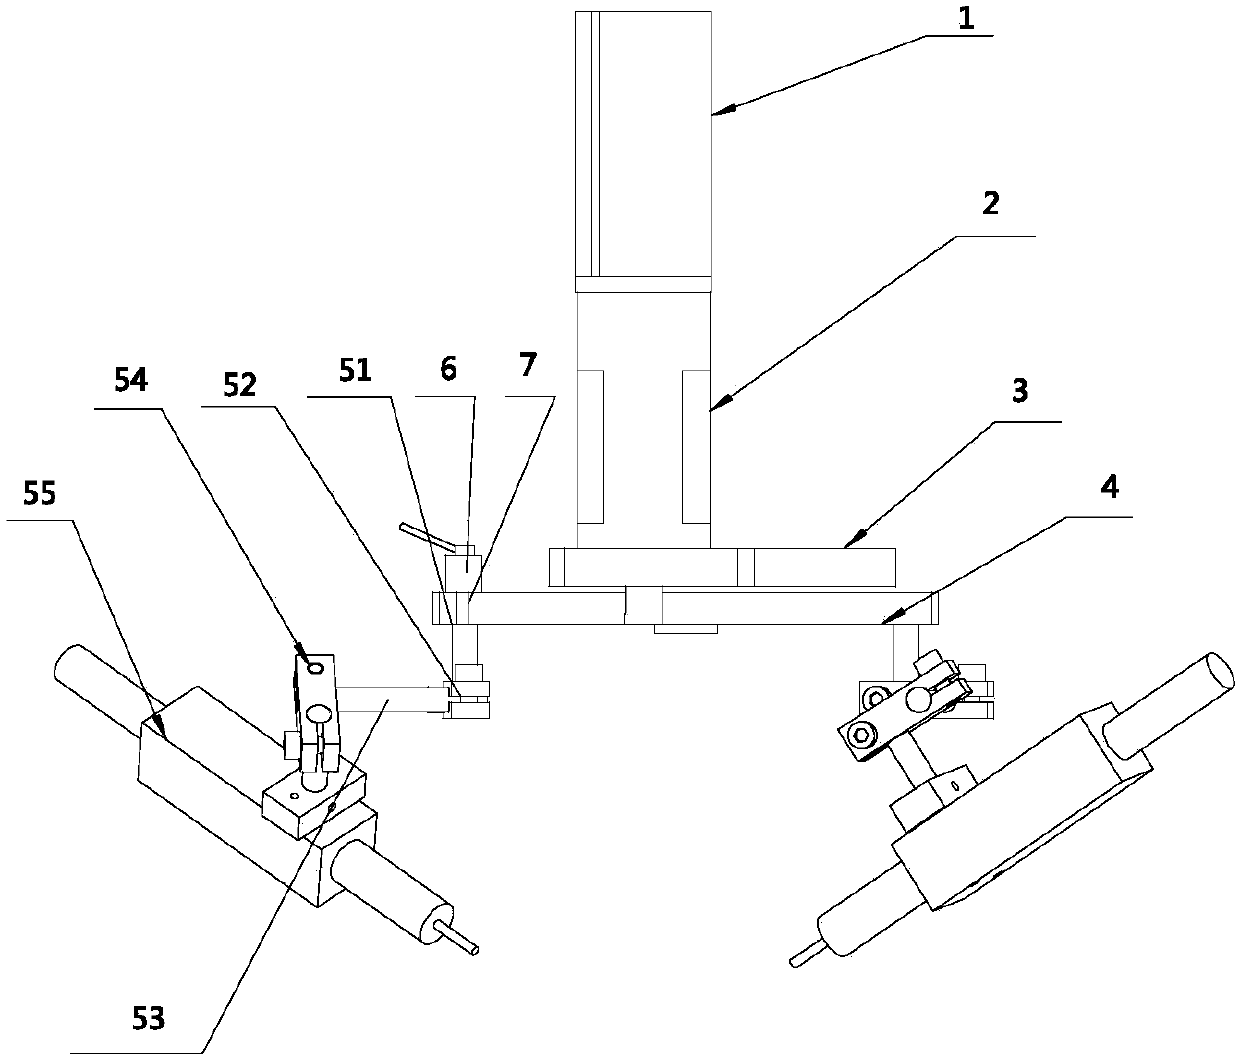 Rotary oil coating mechanism driven by servo motor